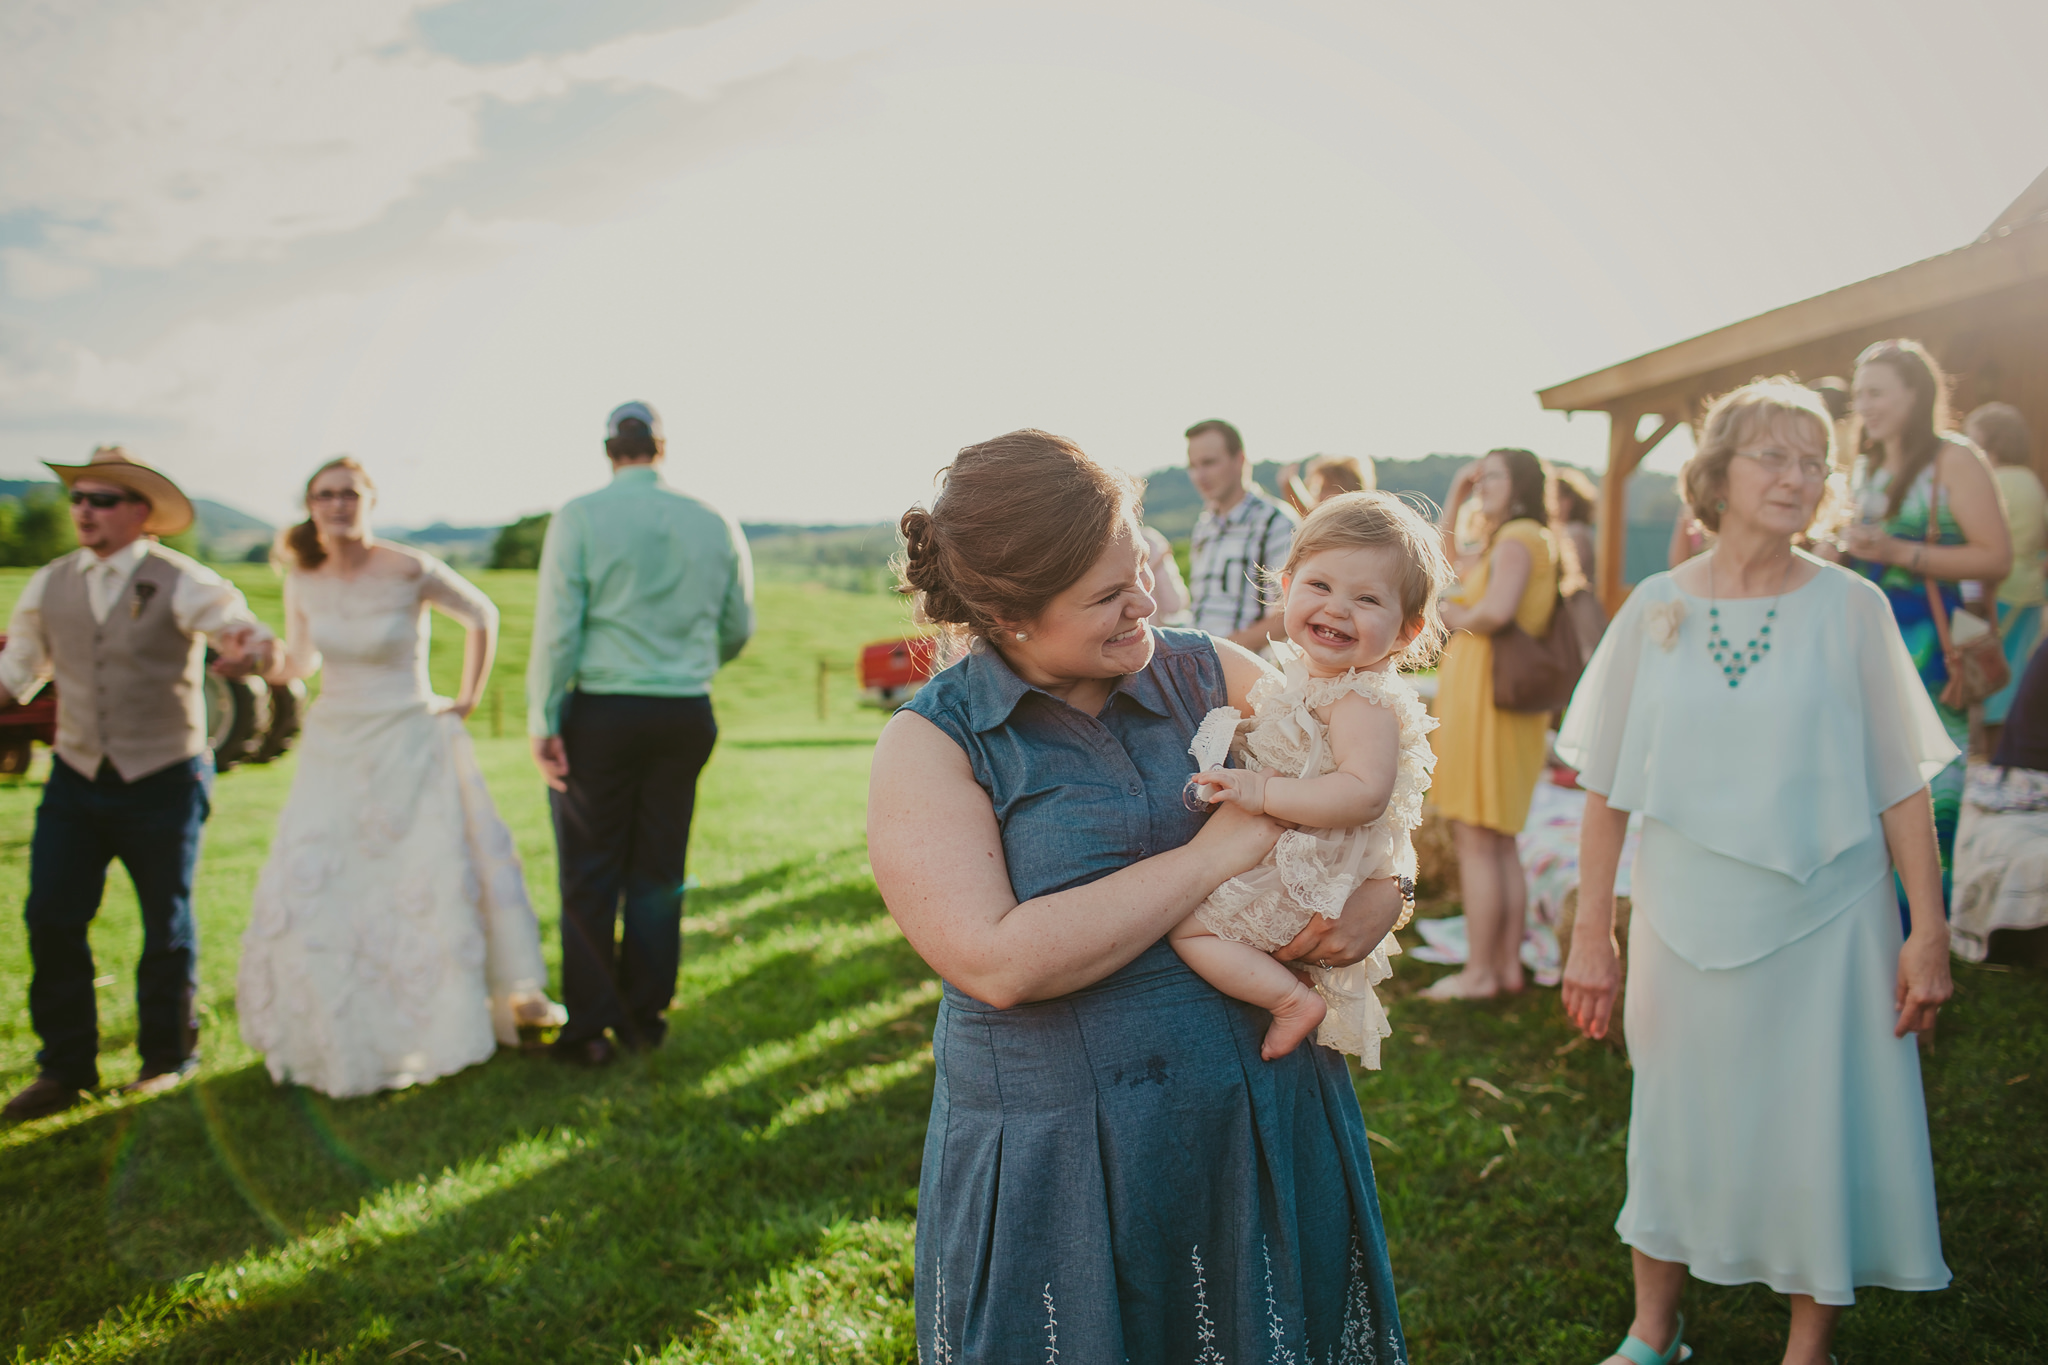 Middlefork Barn Wedding in Meadowview, VA by Mabyn Ludke Photography